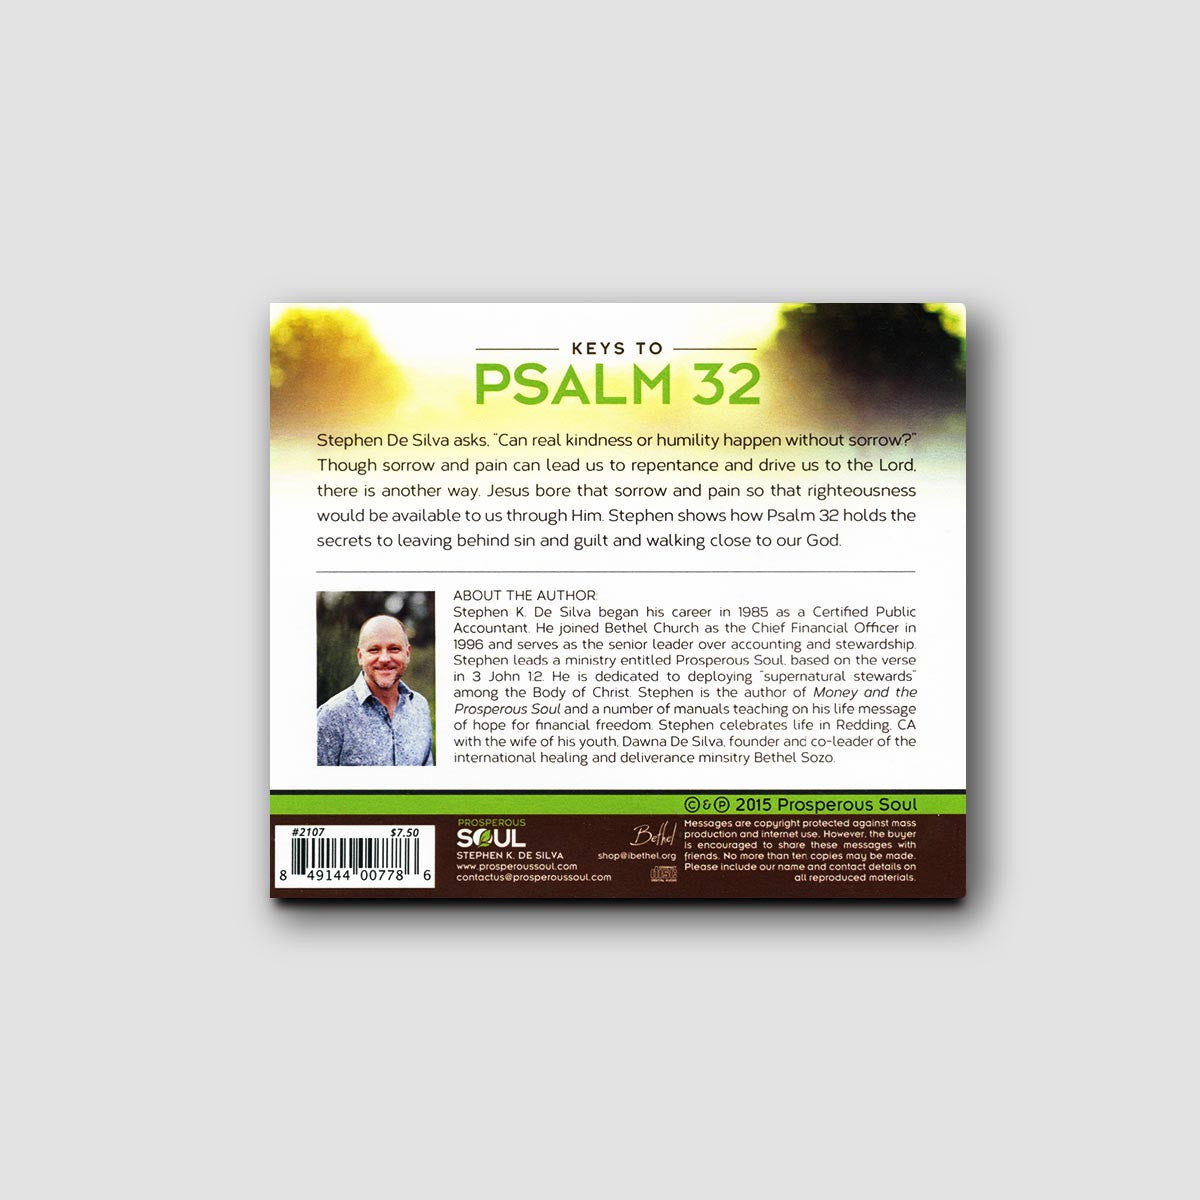 Keys to Psalm 32